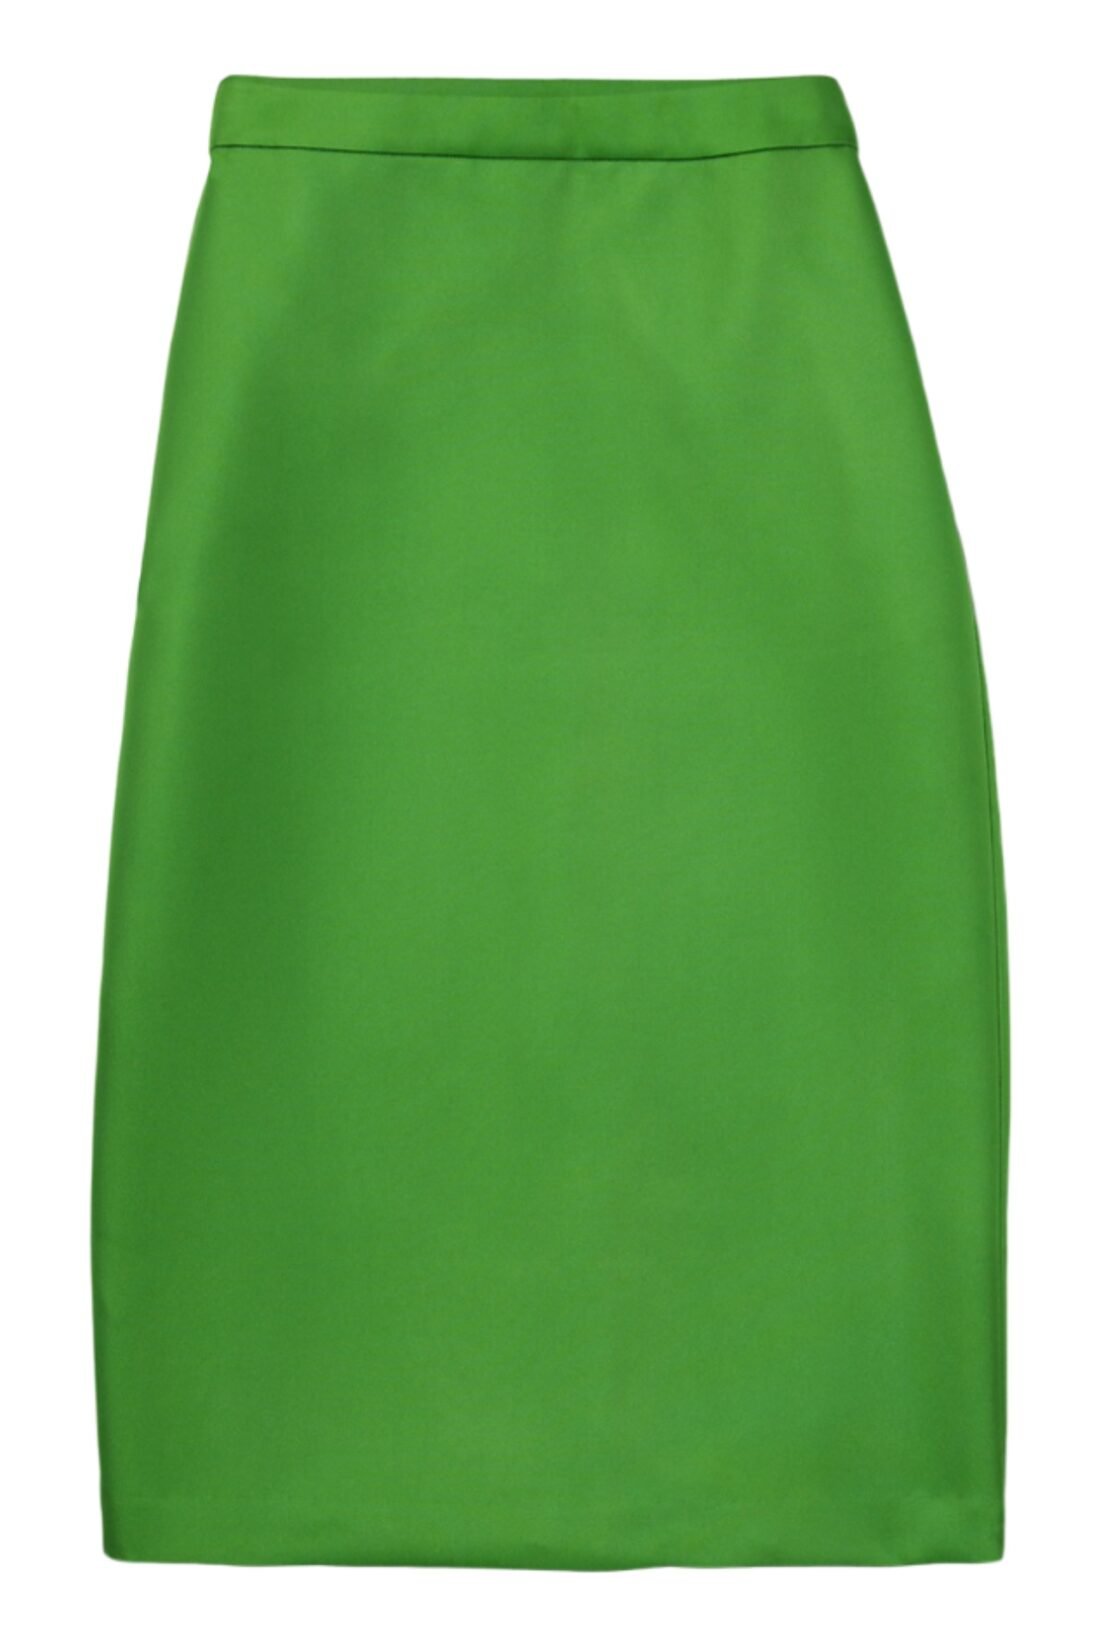 Green Satin Pencil Skirt